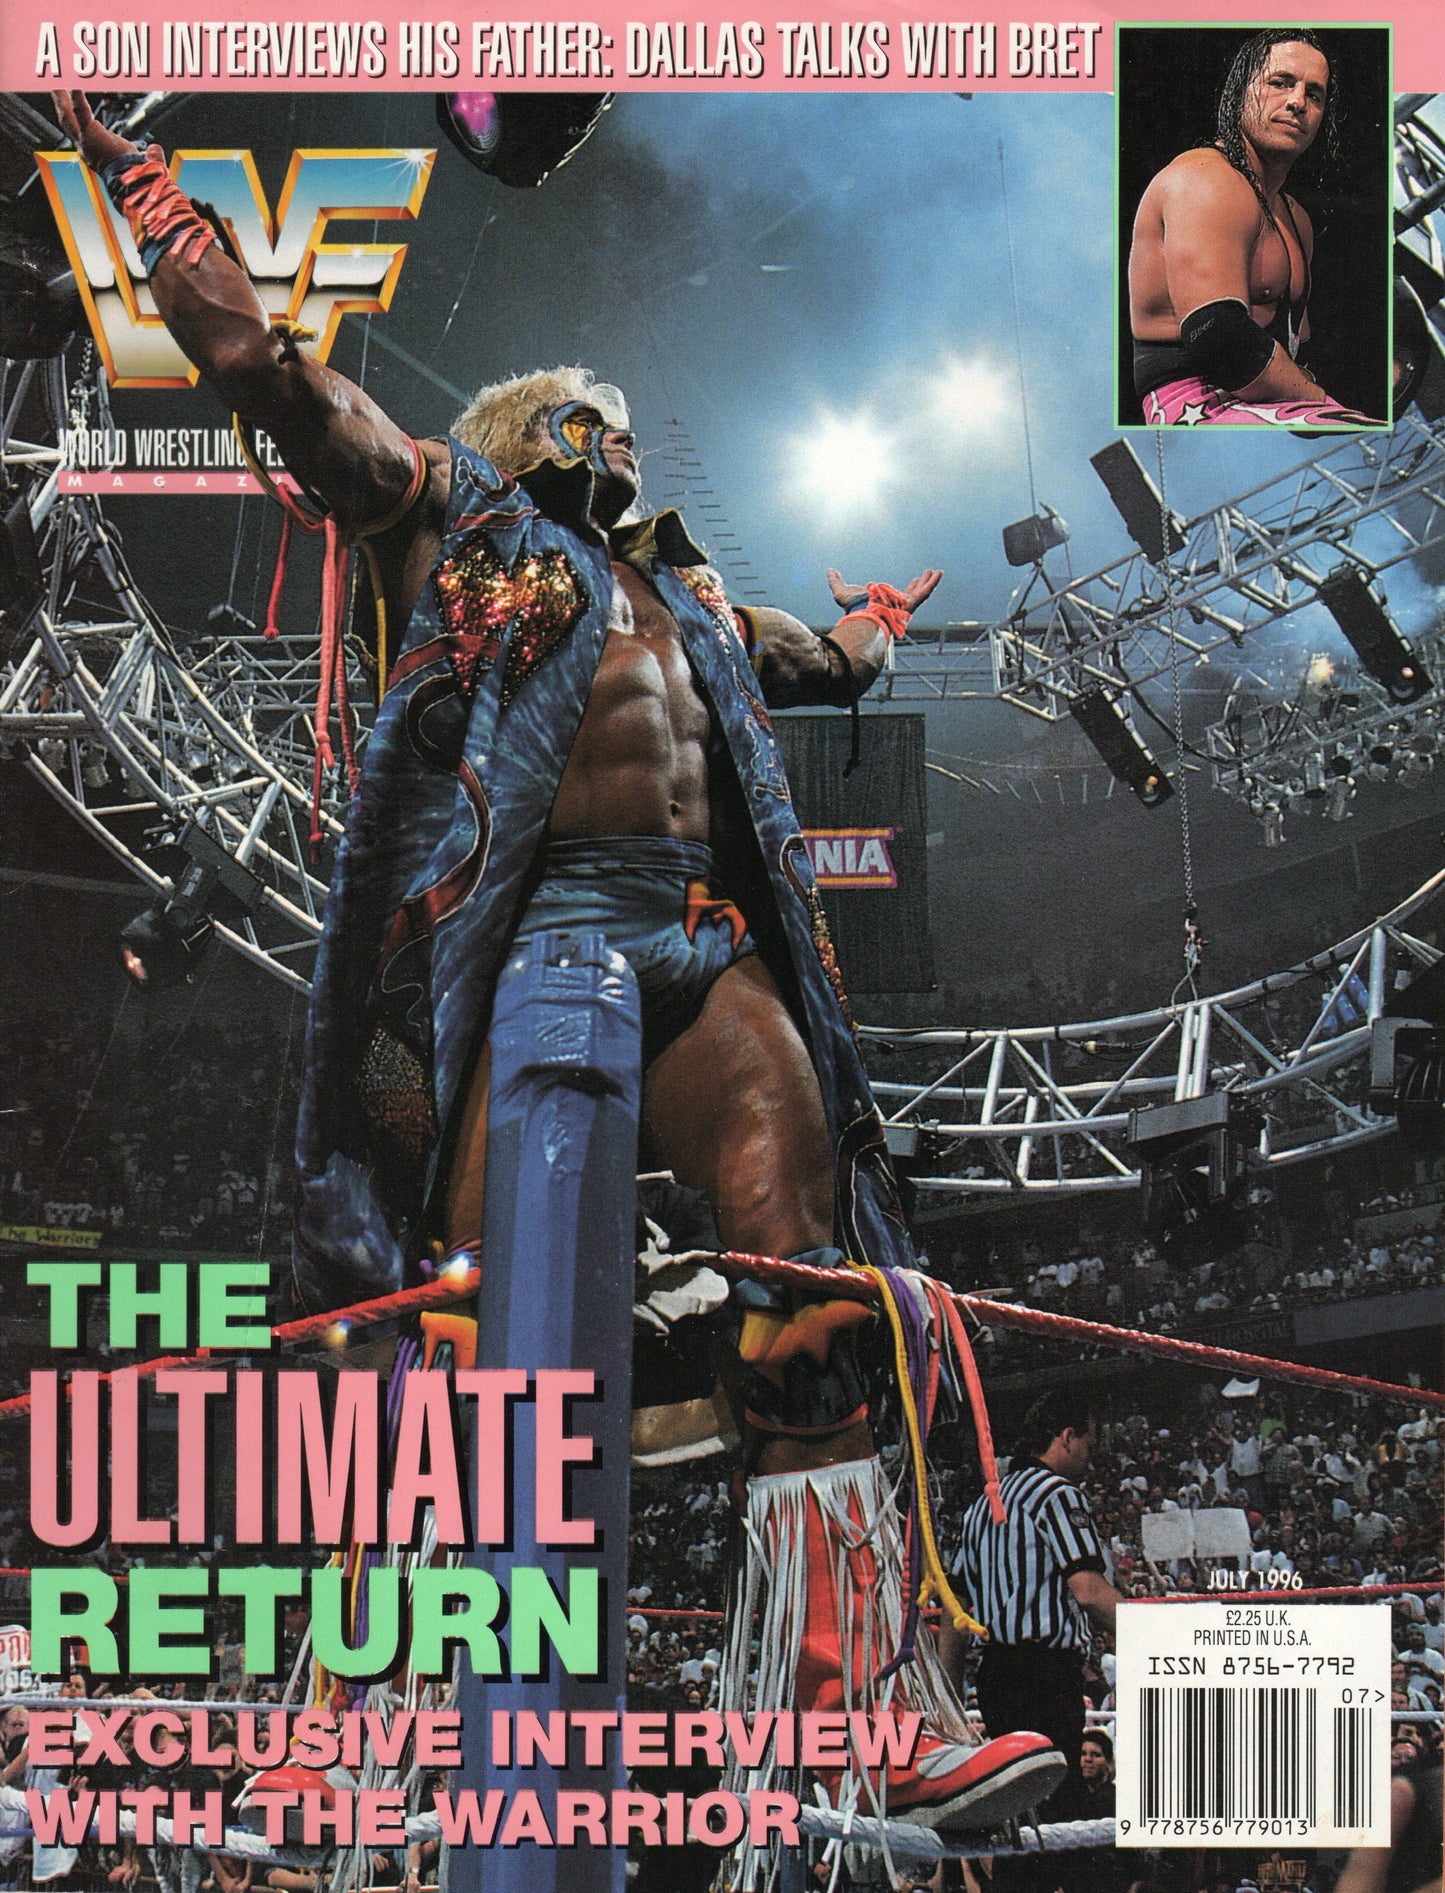 WWF Magazine July 1996